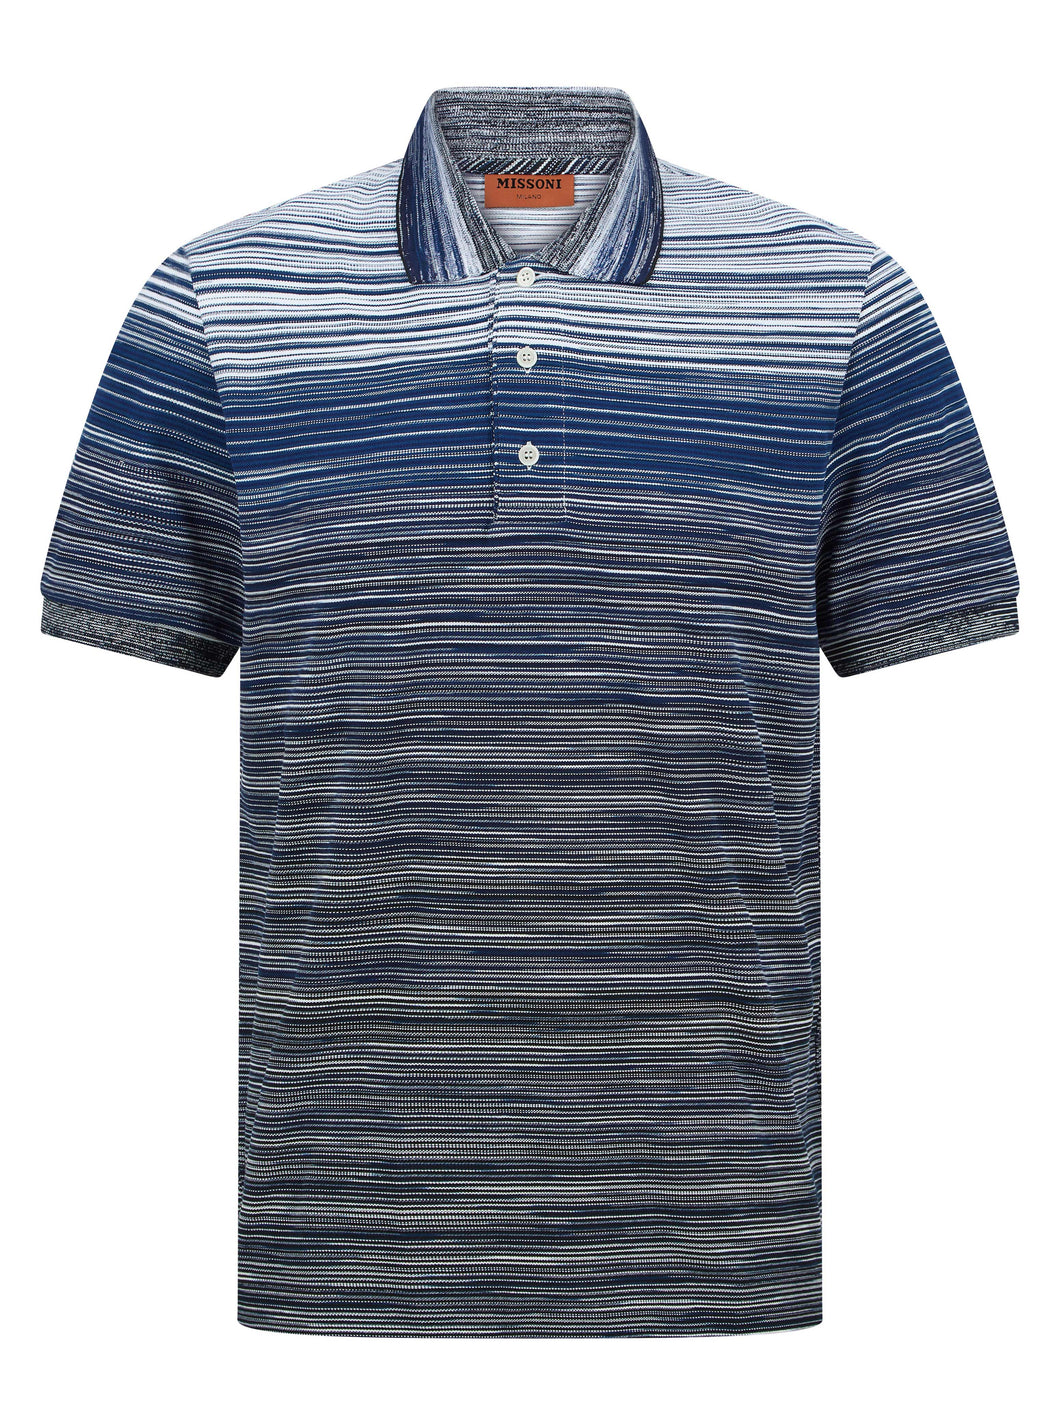 Missoni Classic Stripe Polo Shirt Navy